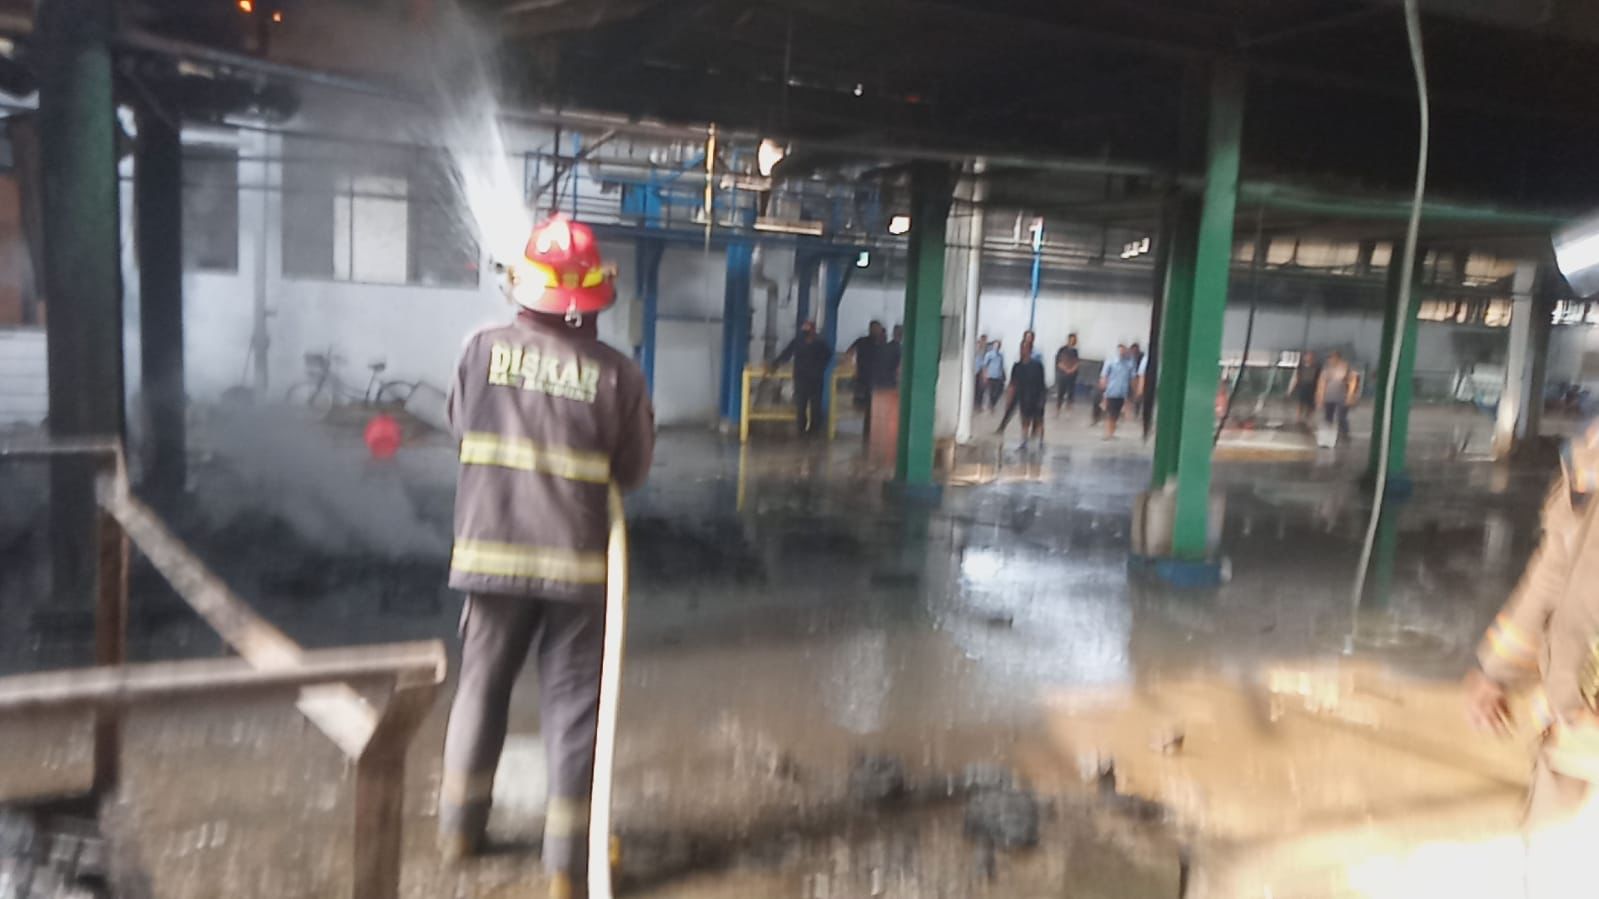 Dua orang Pekerja Jadi Korban Kebakaran di Pabrik Tekstil Dayeuhkolot, Kabupaten Bandung. Foto (Dok. Disdamkar Kabupaten Bandung)